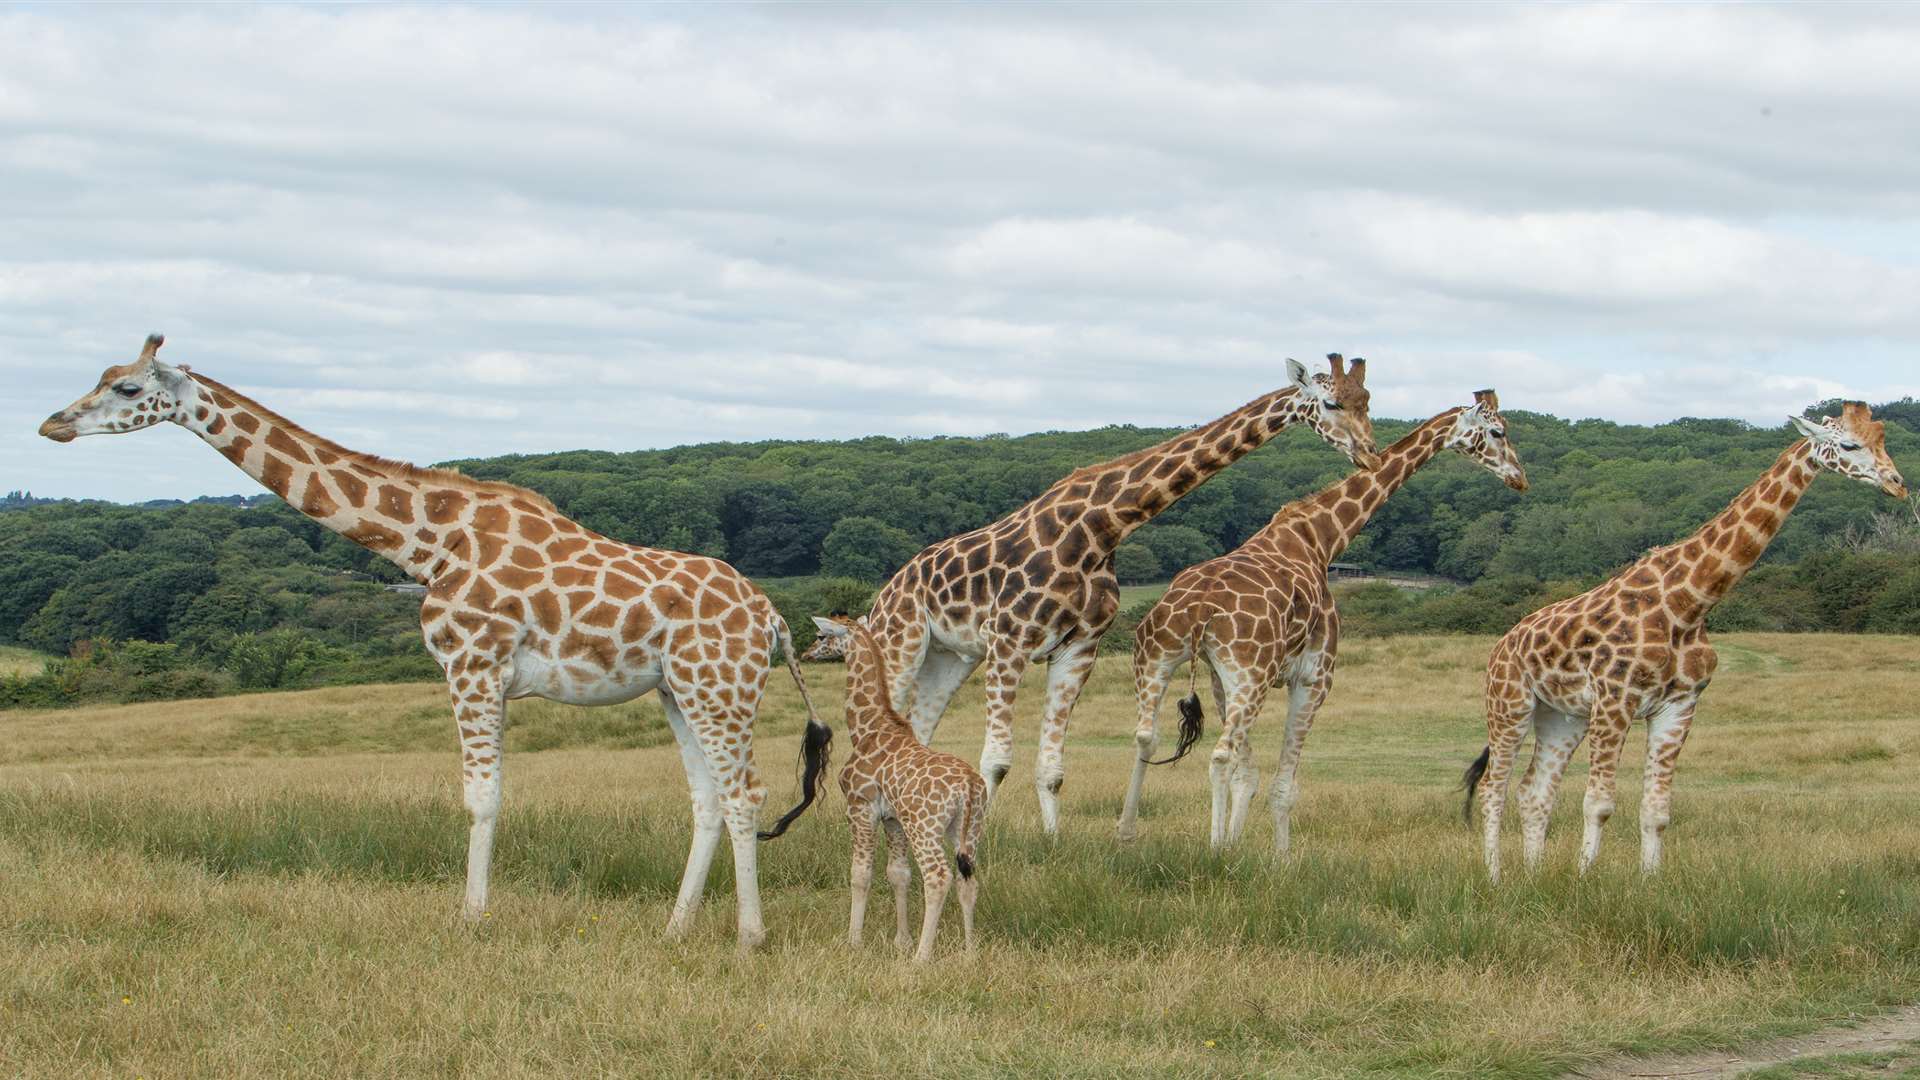 Join the giraffes at Port Lymne Reserve